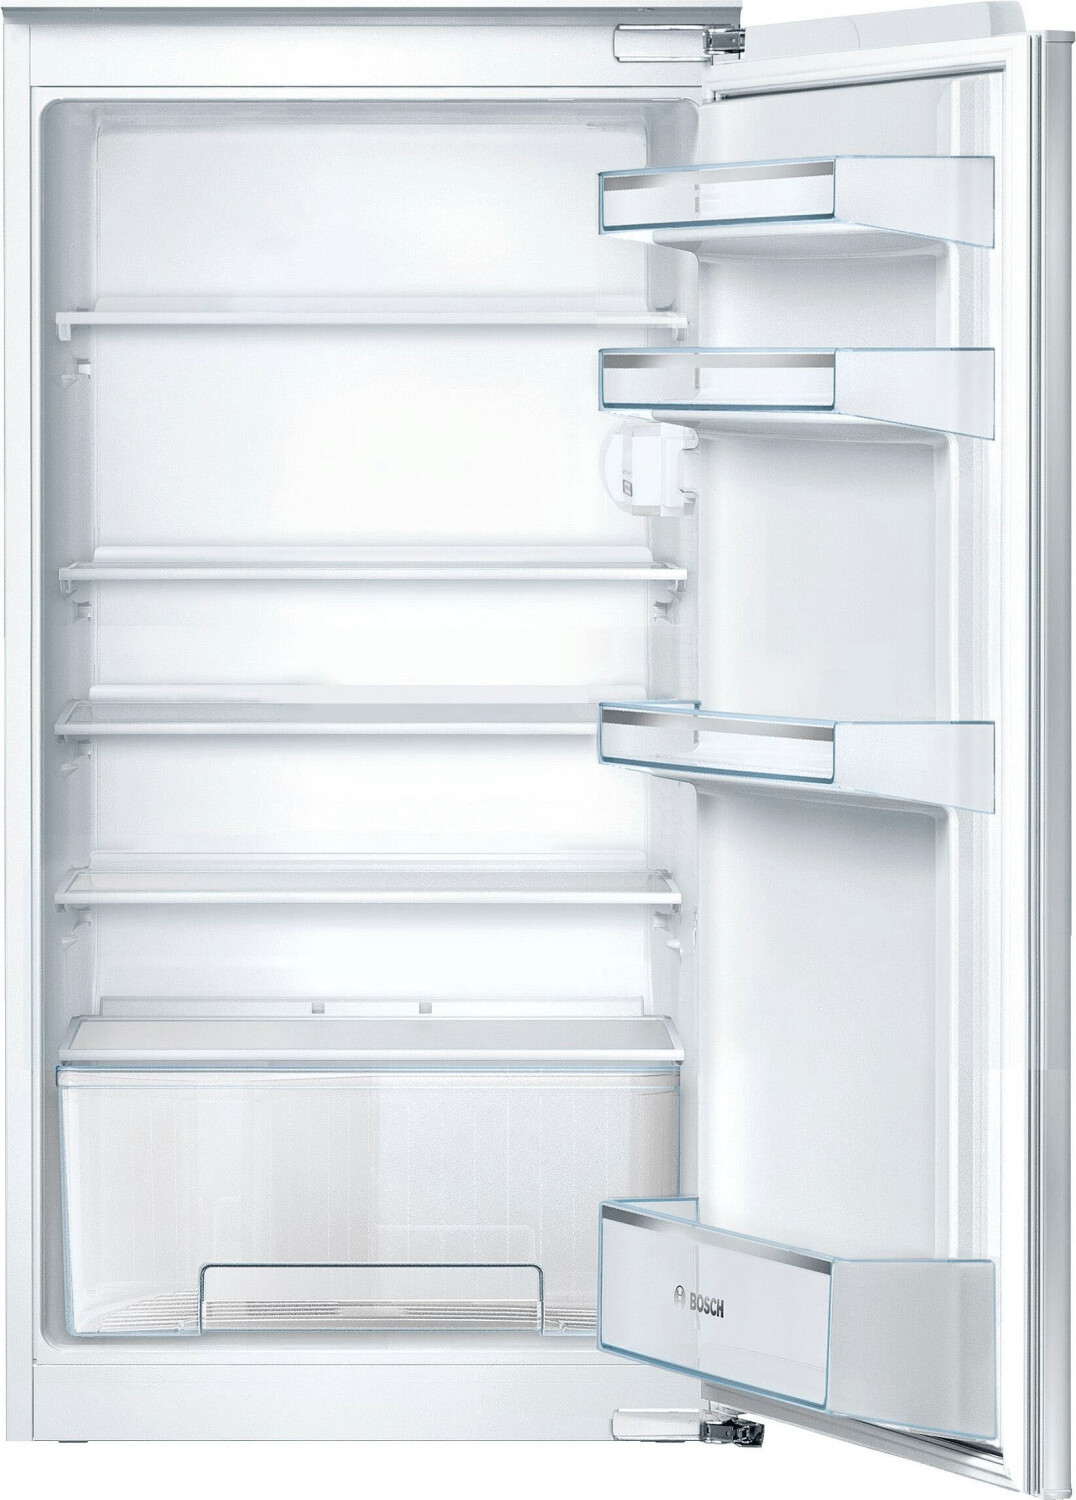 Холодильник через 1. Холодильник Bosch KIV 865sf0. Встраиваемый холодильник Сименс. Встраиваемый холодильник Bosch без морозильной камеры. Холодильный шкаф Bosch kir81vsf0.